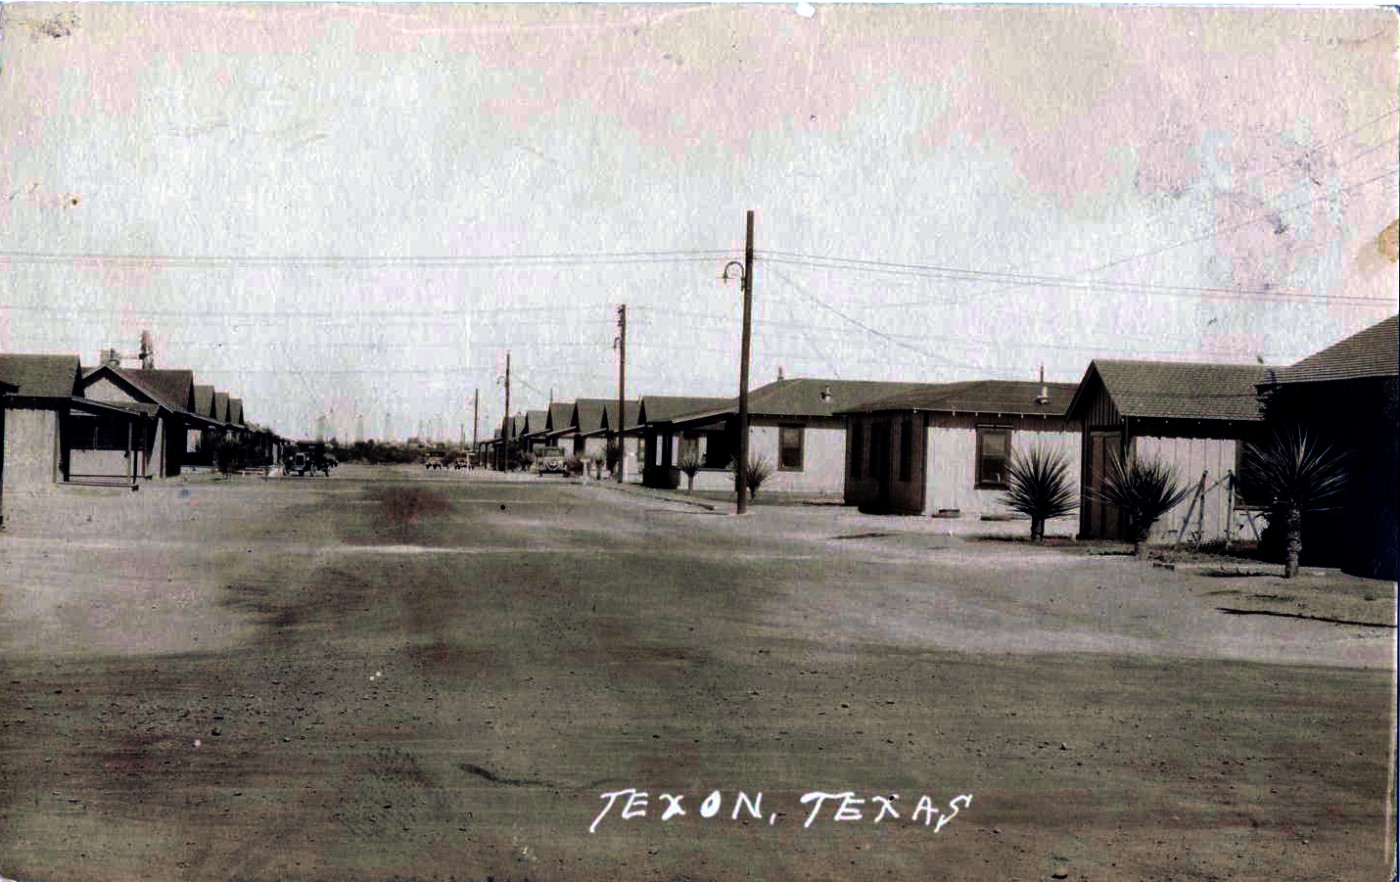 Residential Street in Texon Texas in 1920s